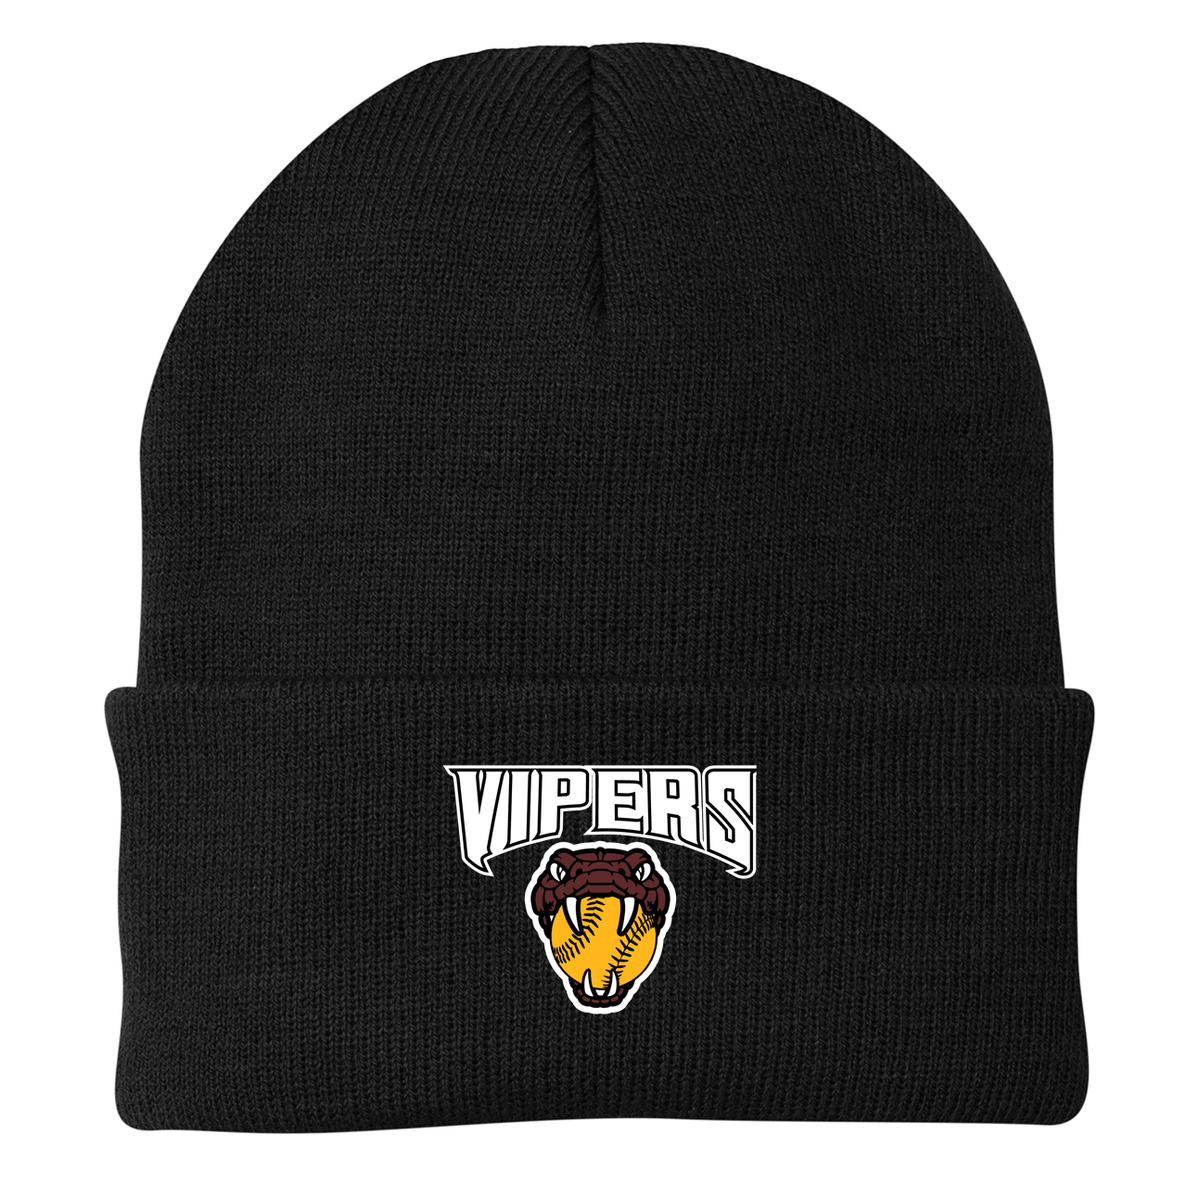 Vipers Softball  Knit Beanie